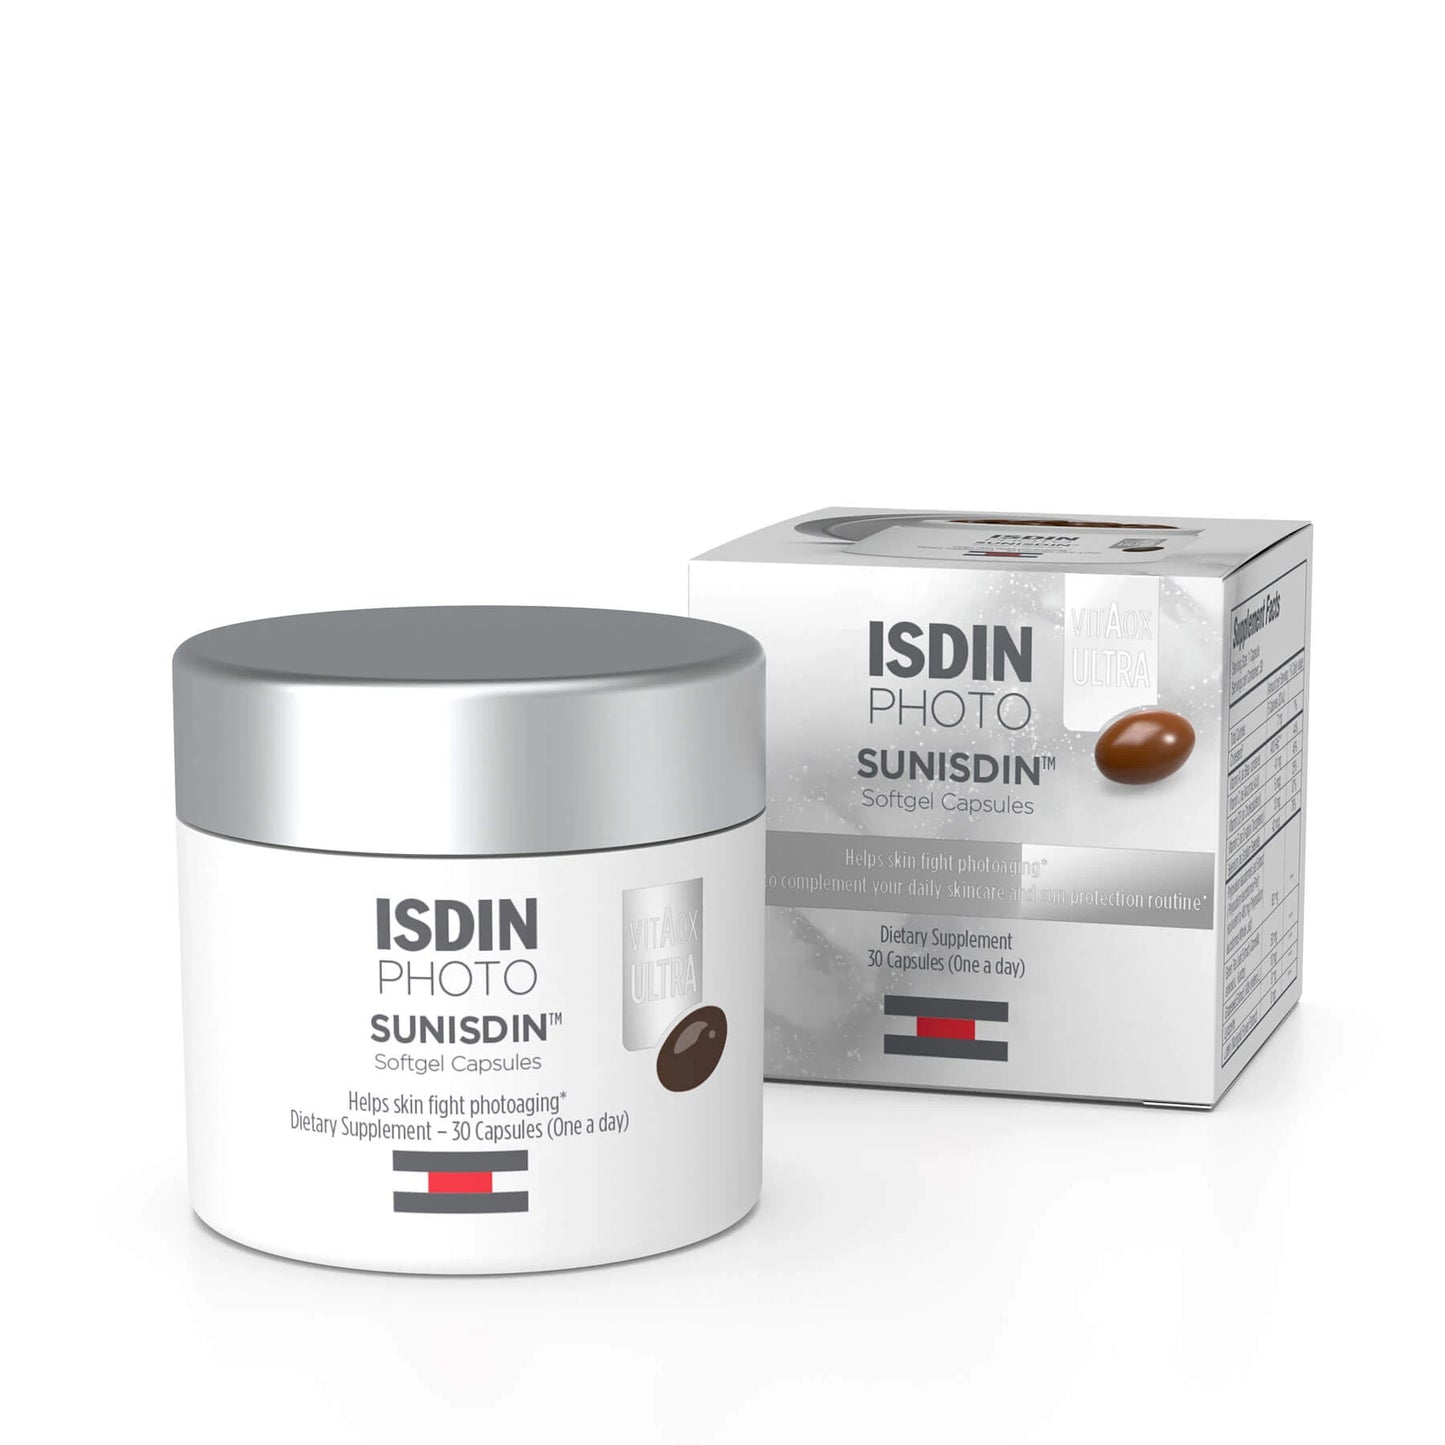 Photo SUNISDIN soft gel capsules by ISDIN